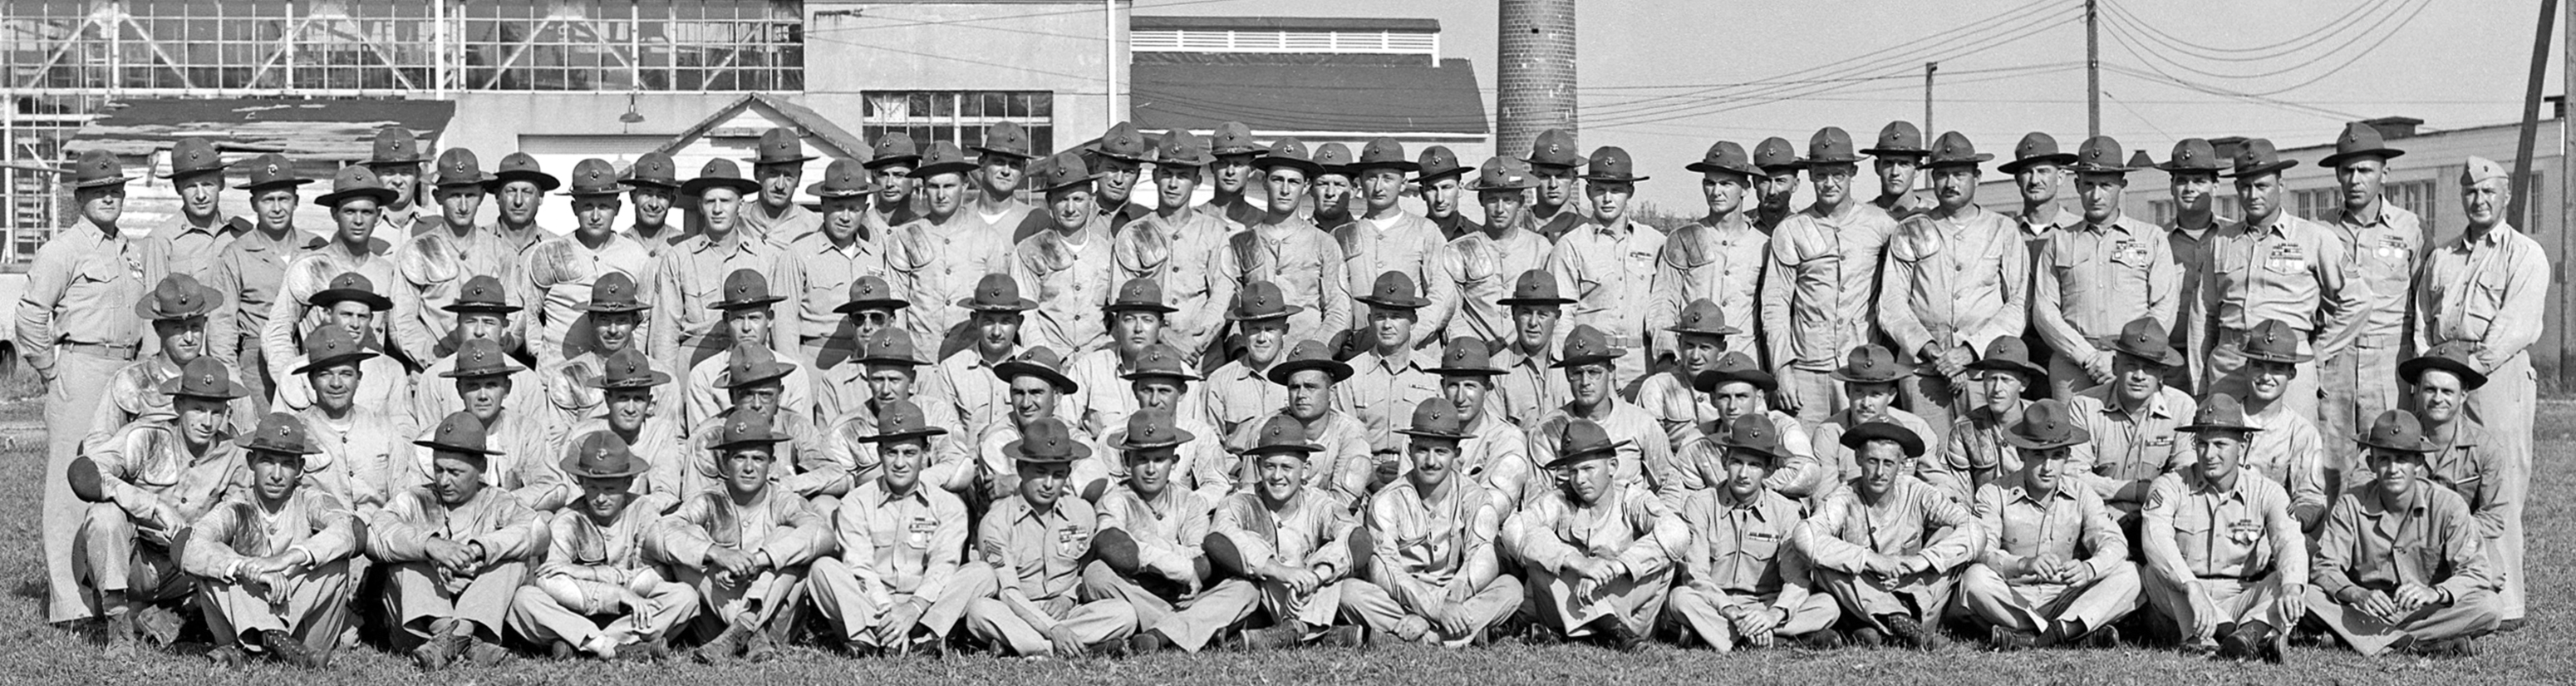 U S Marine Corps Group Team Photographs - roblox tc2 hats